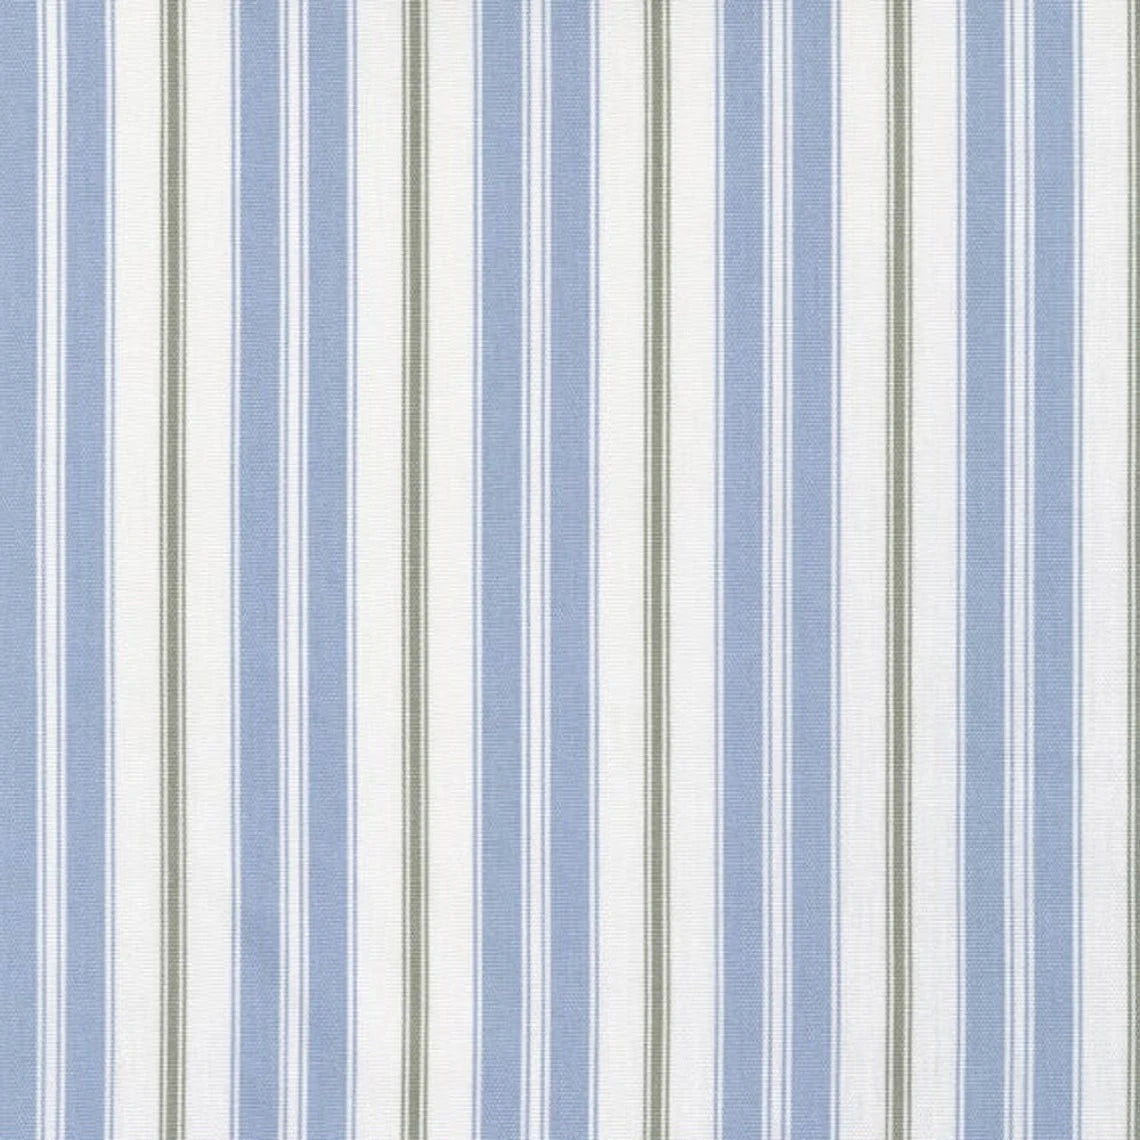 duvet cover in newbury antique blue stripe- blue, green, white